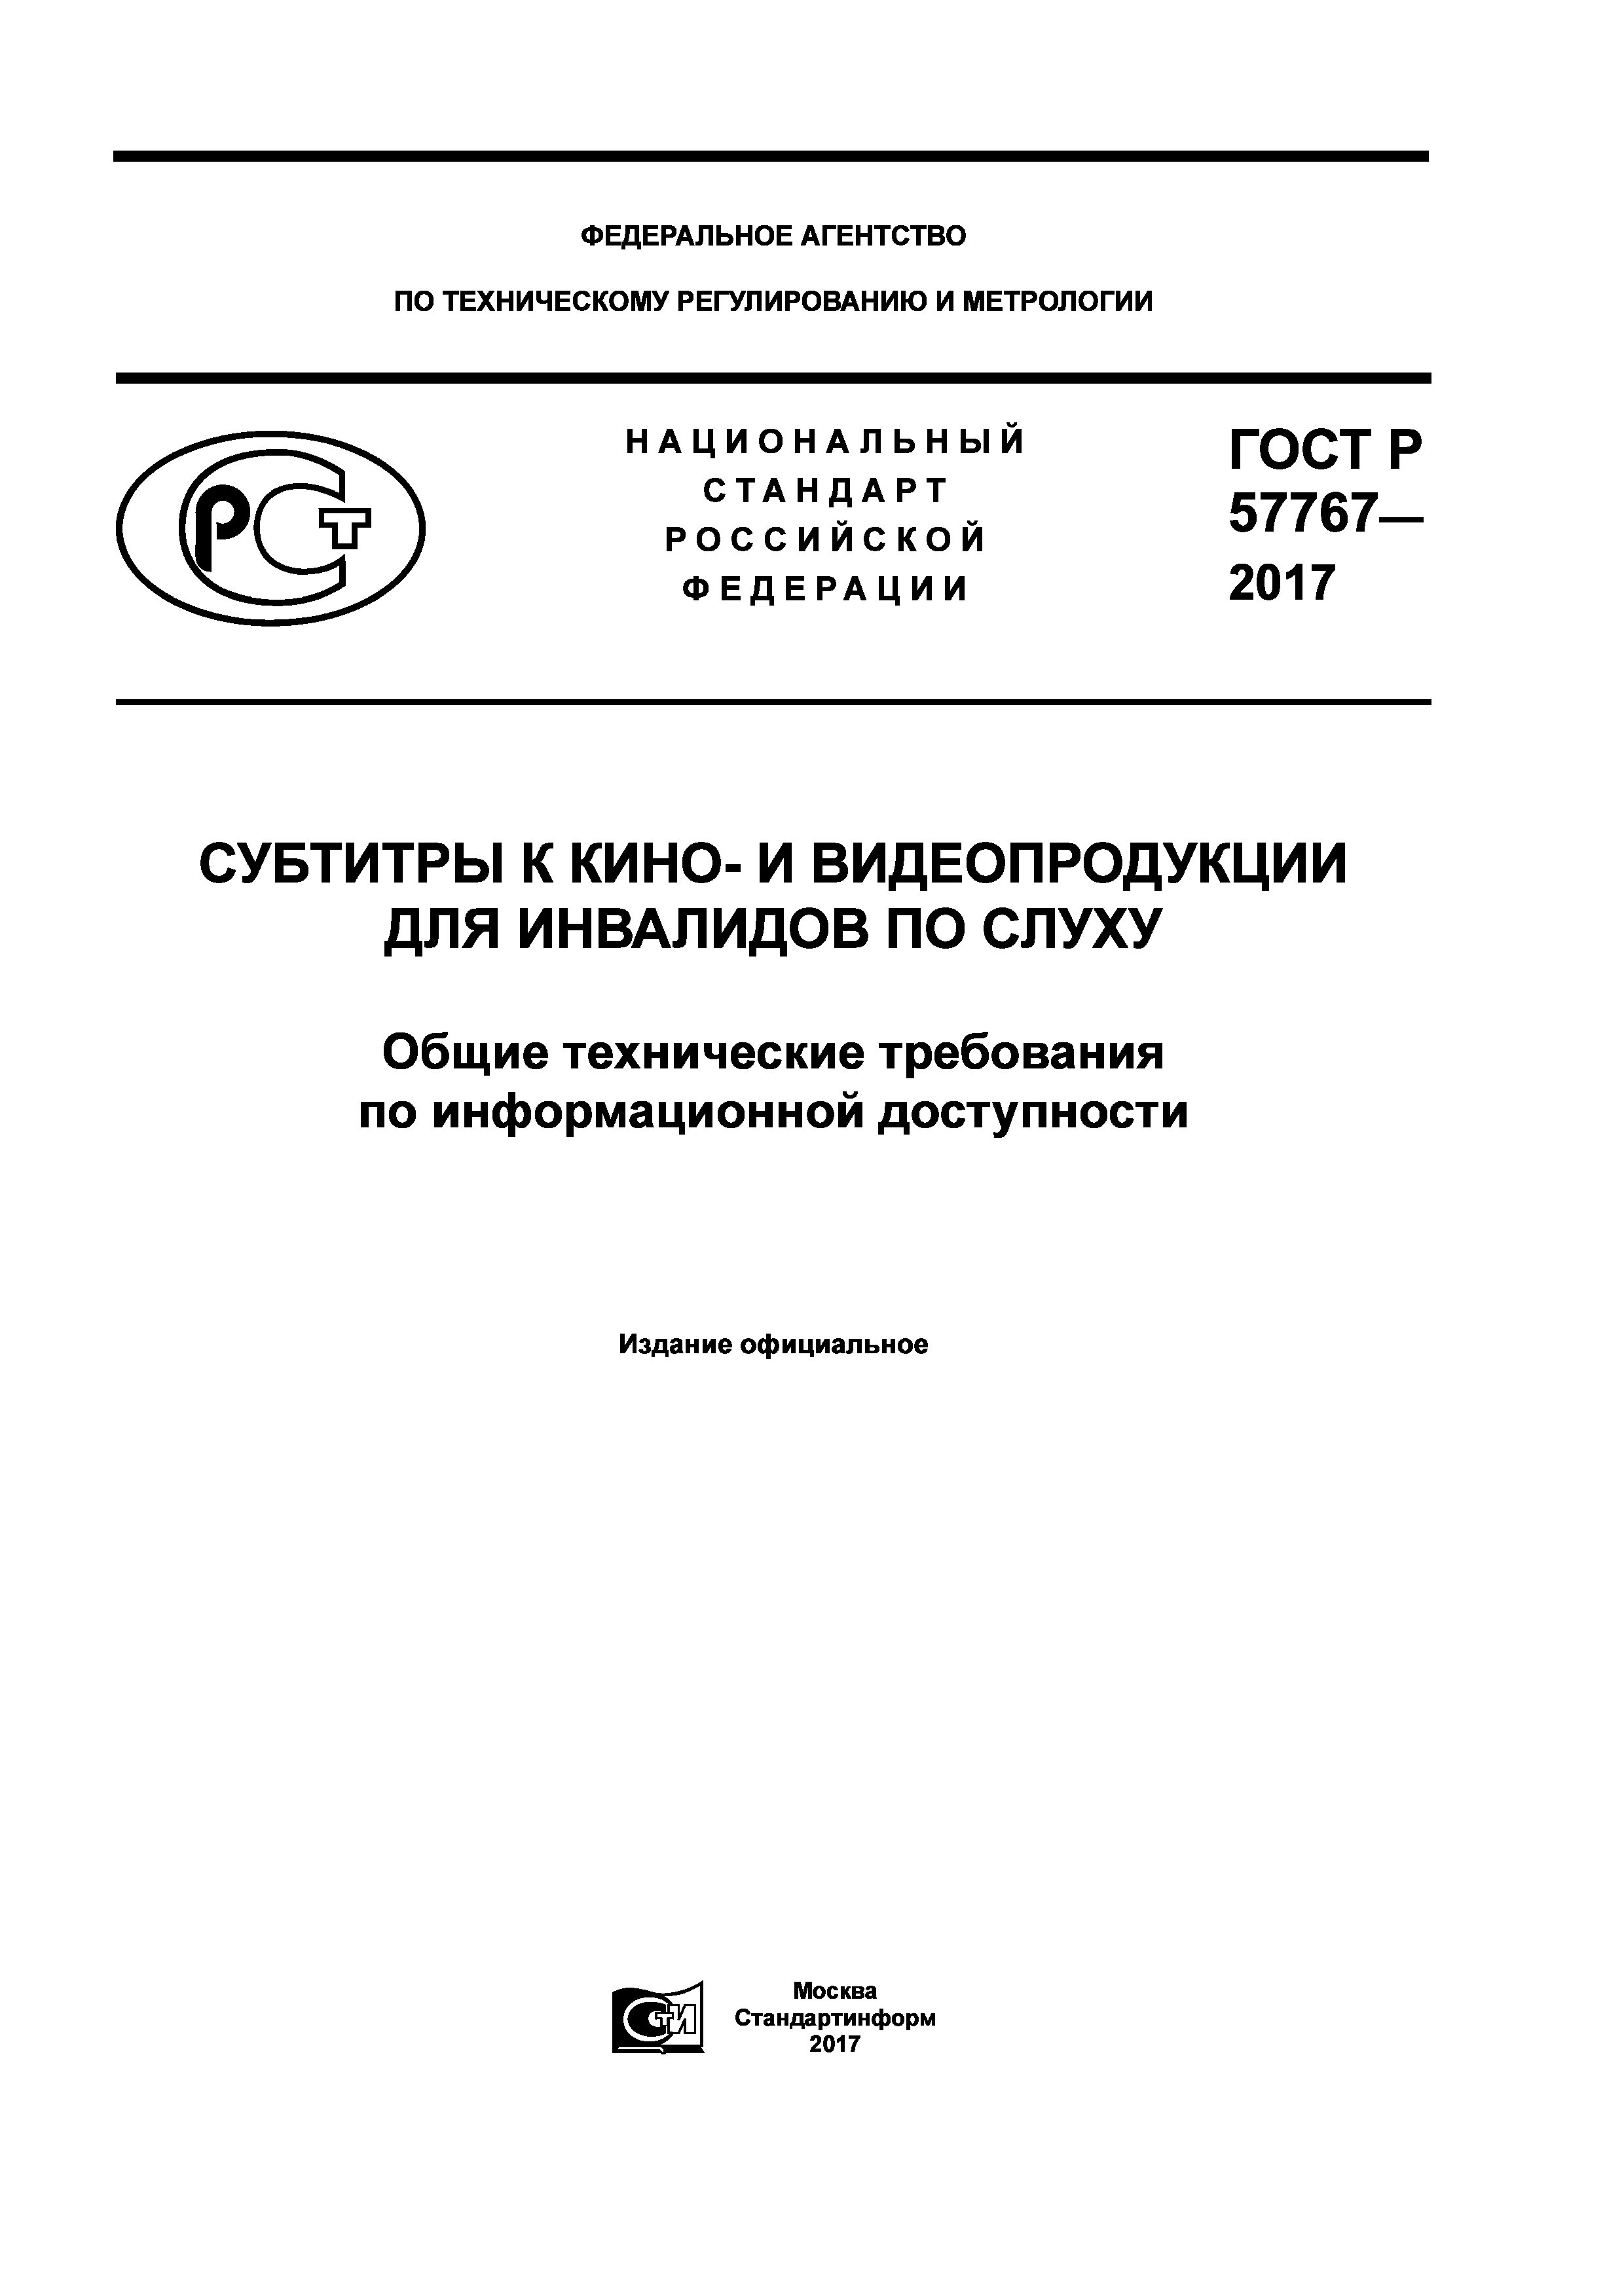 ГОСТ Р 57767-2017